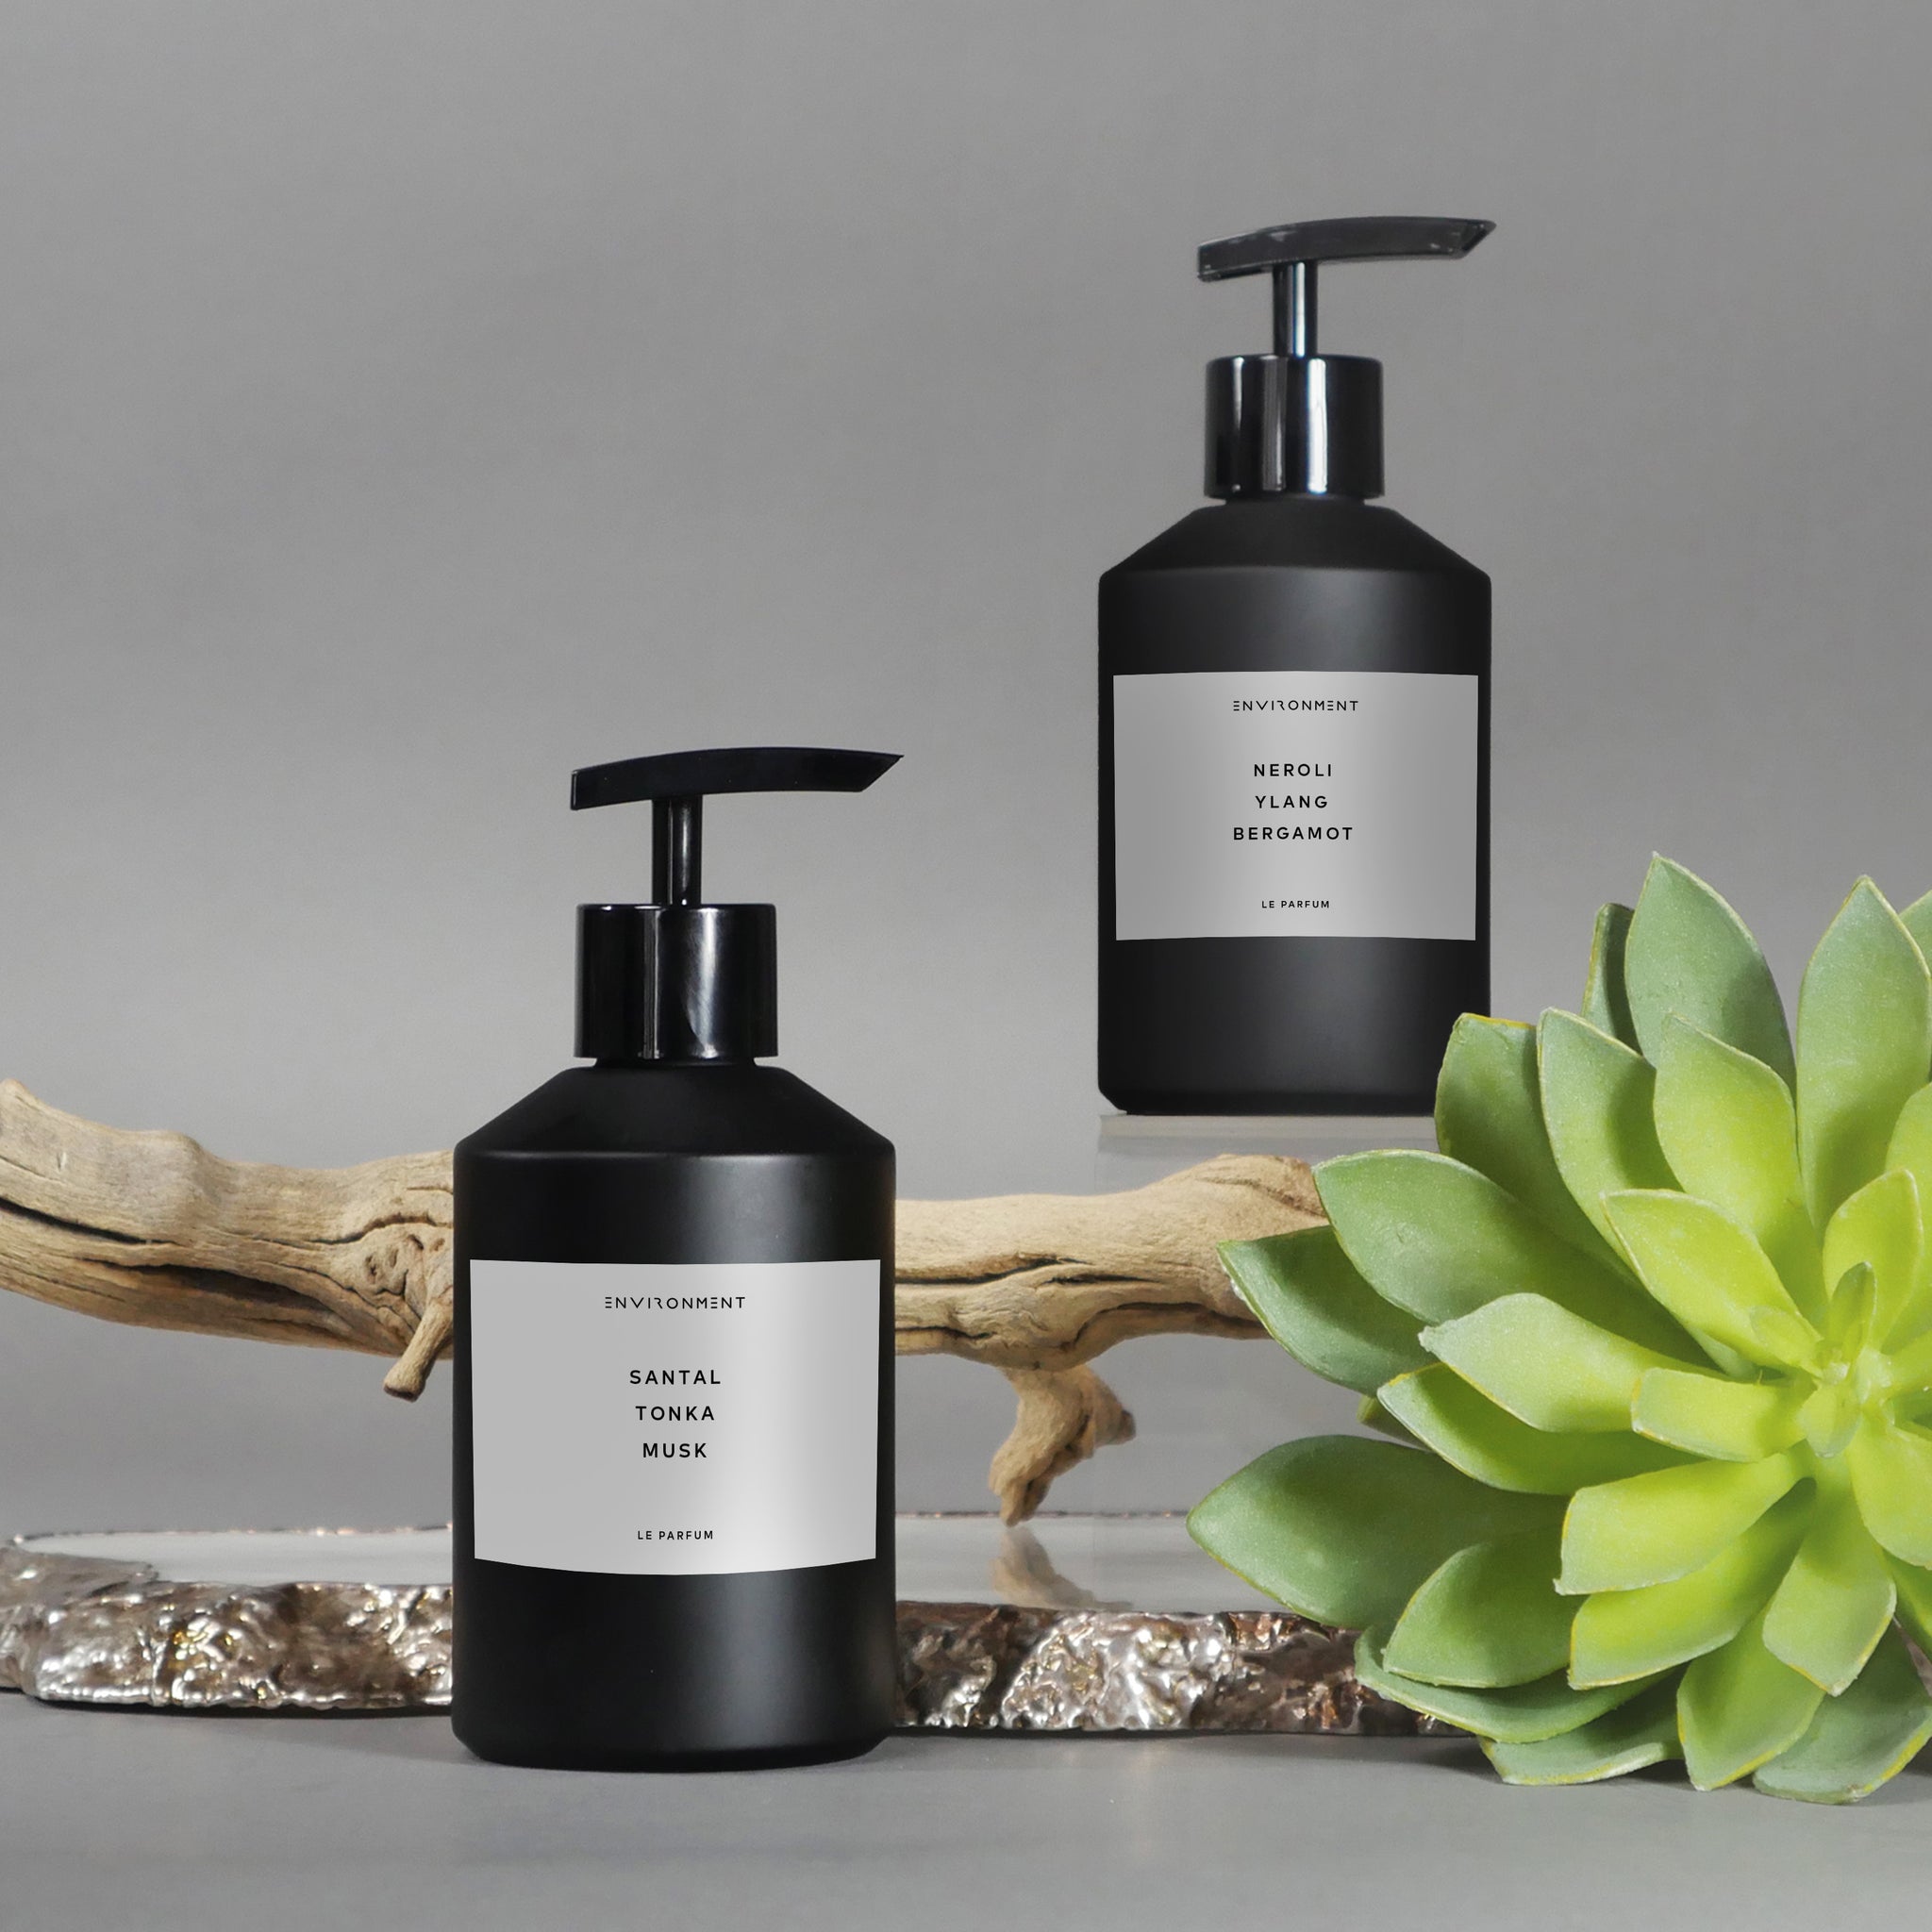 Petitgrain | Carnation | White Cedar Hand Soap (Inspired by YSL L'Homme®)